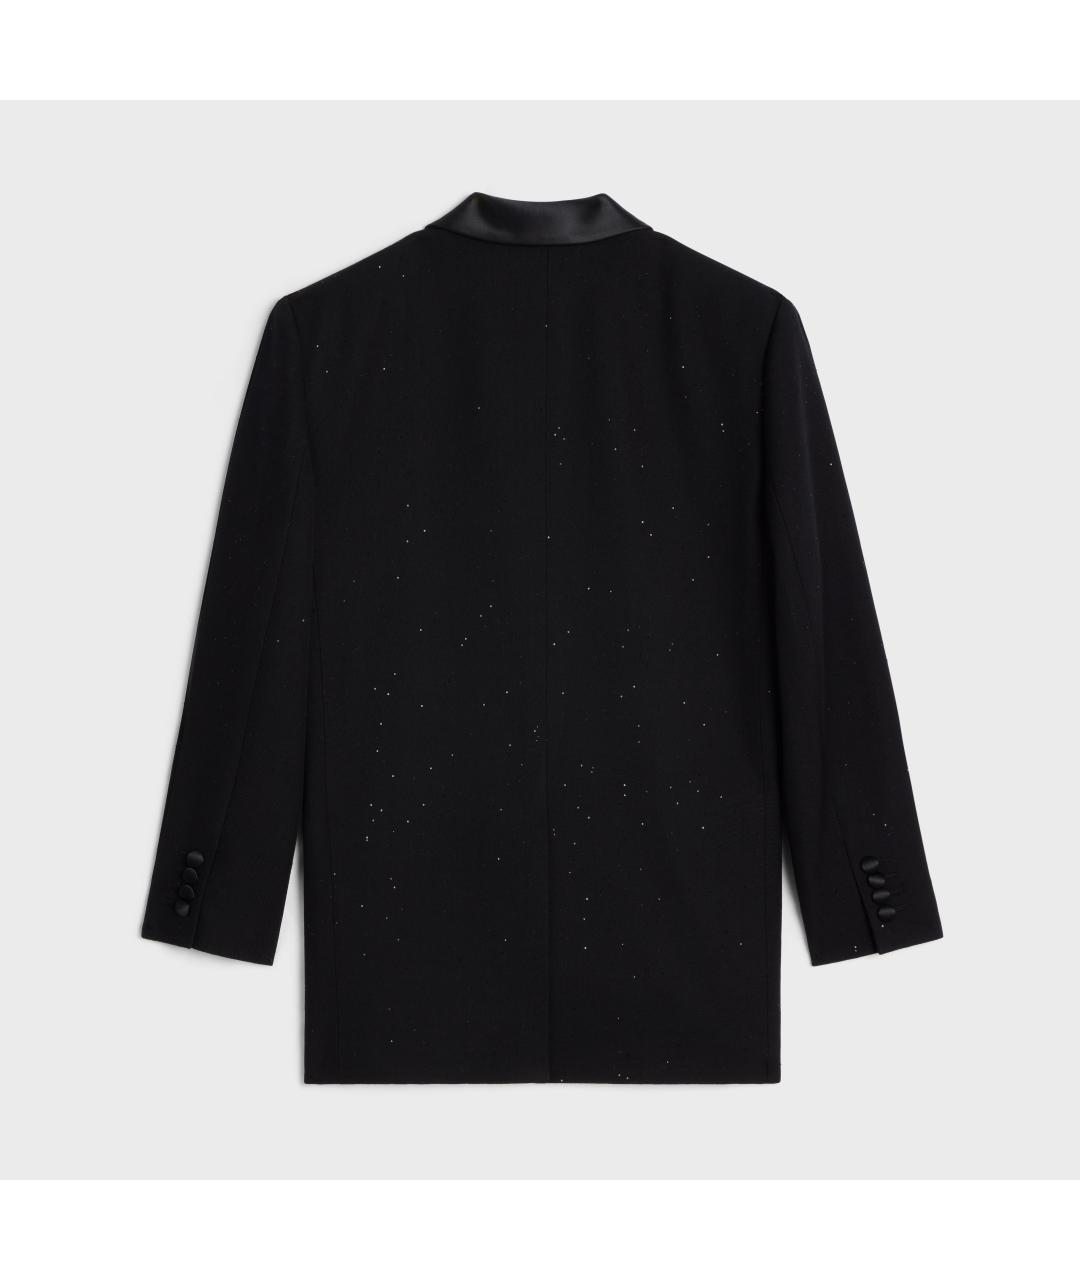 CELINE PRE-OWNED Черный шерстяной жакет/пиджак, фото 2